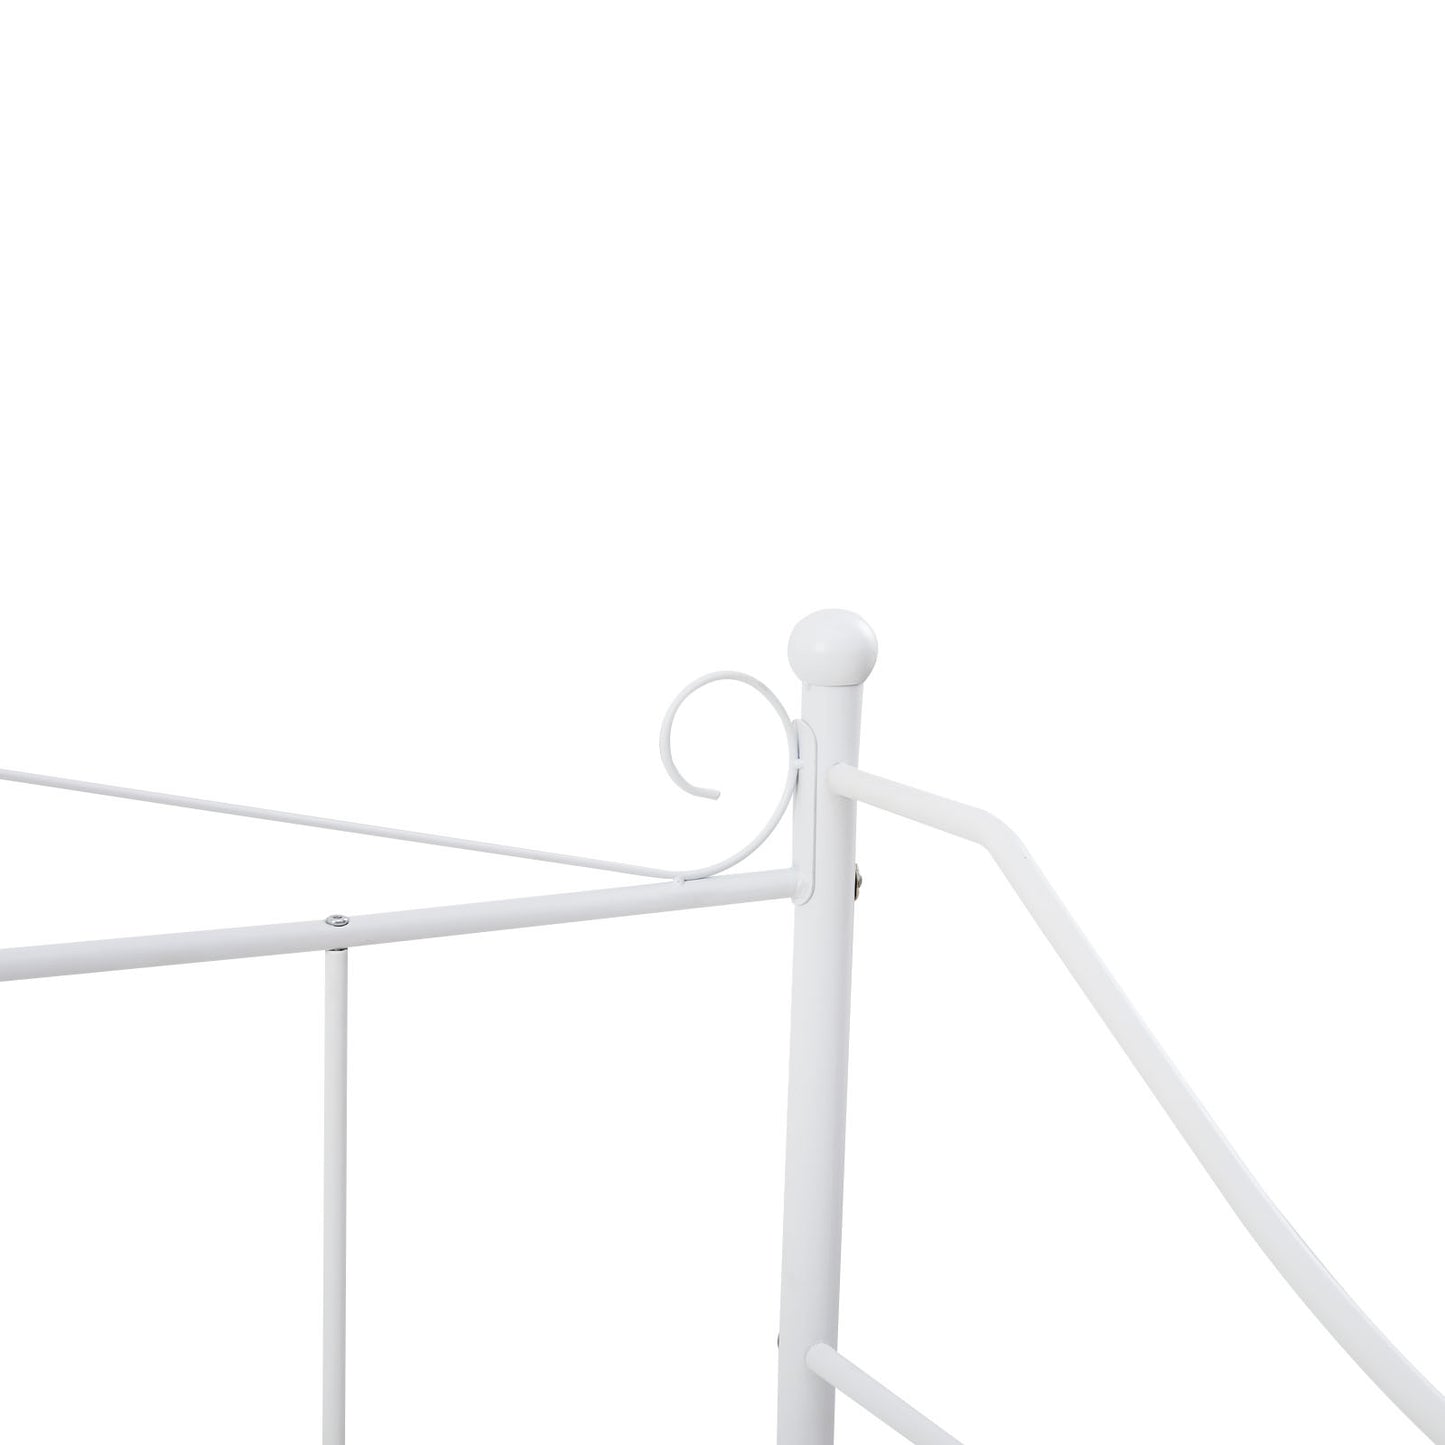 AVIO Single Metal Bed 93*207cm - White